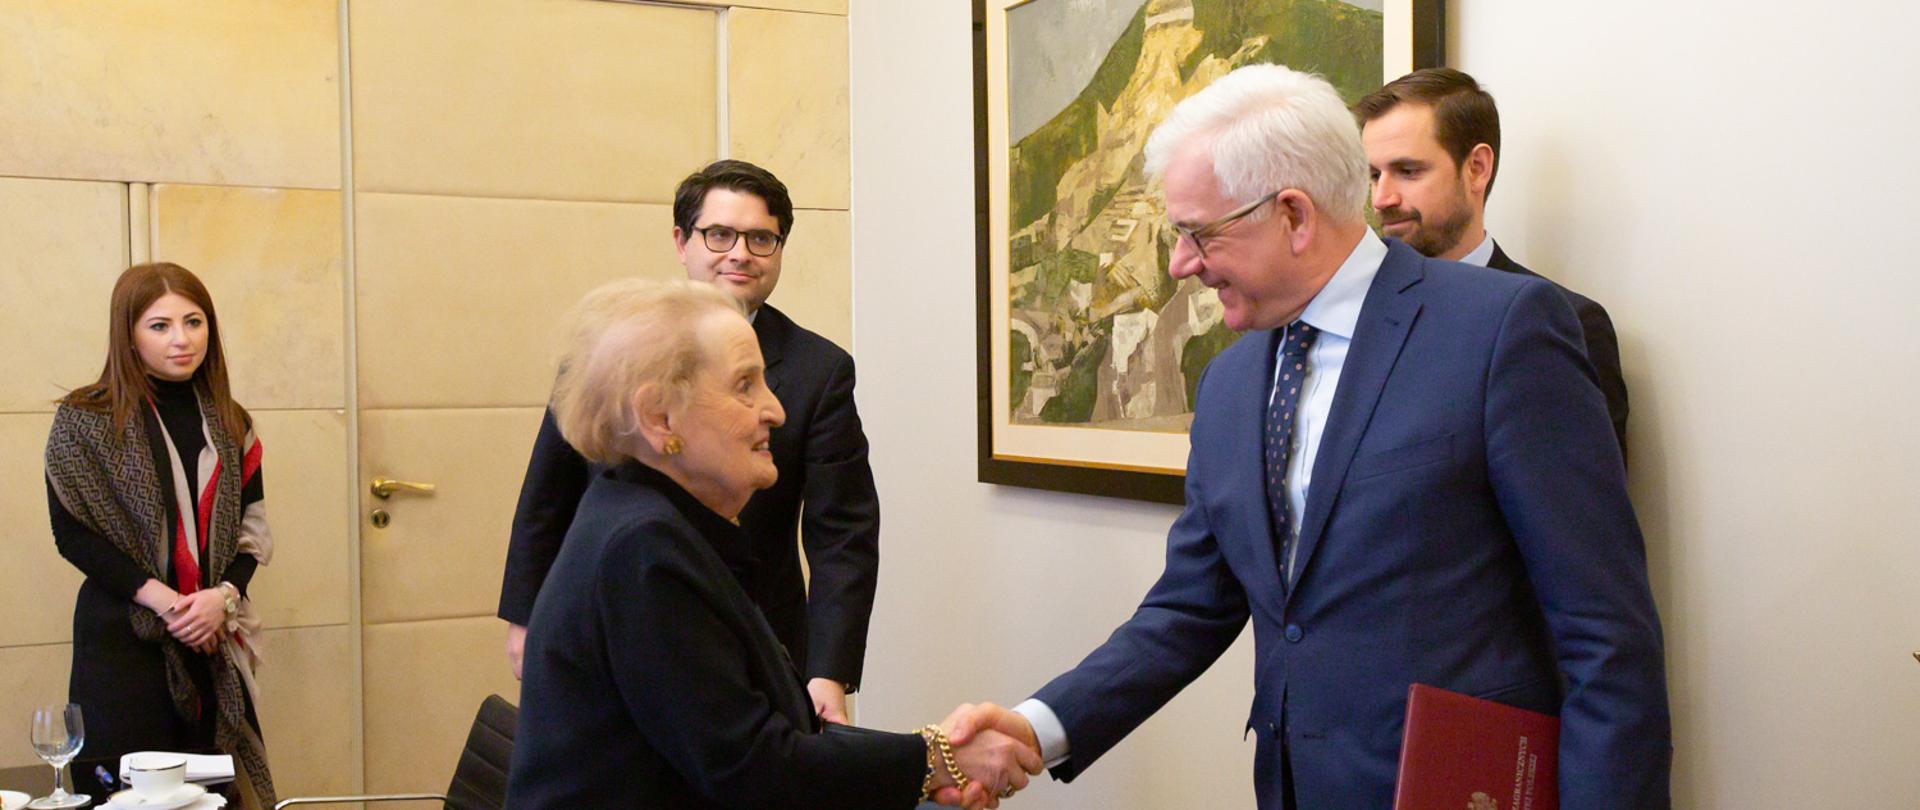 Minister Jacek Czaputowicz meets Madeleine Albright